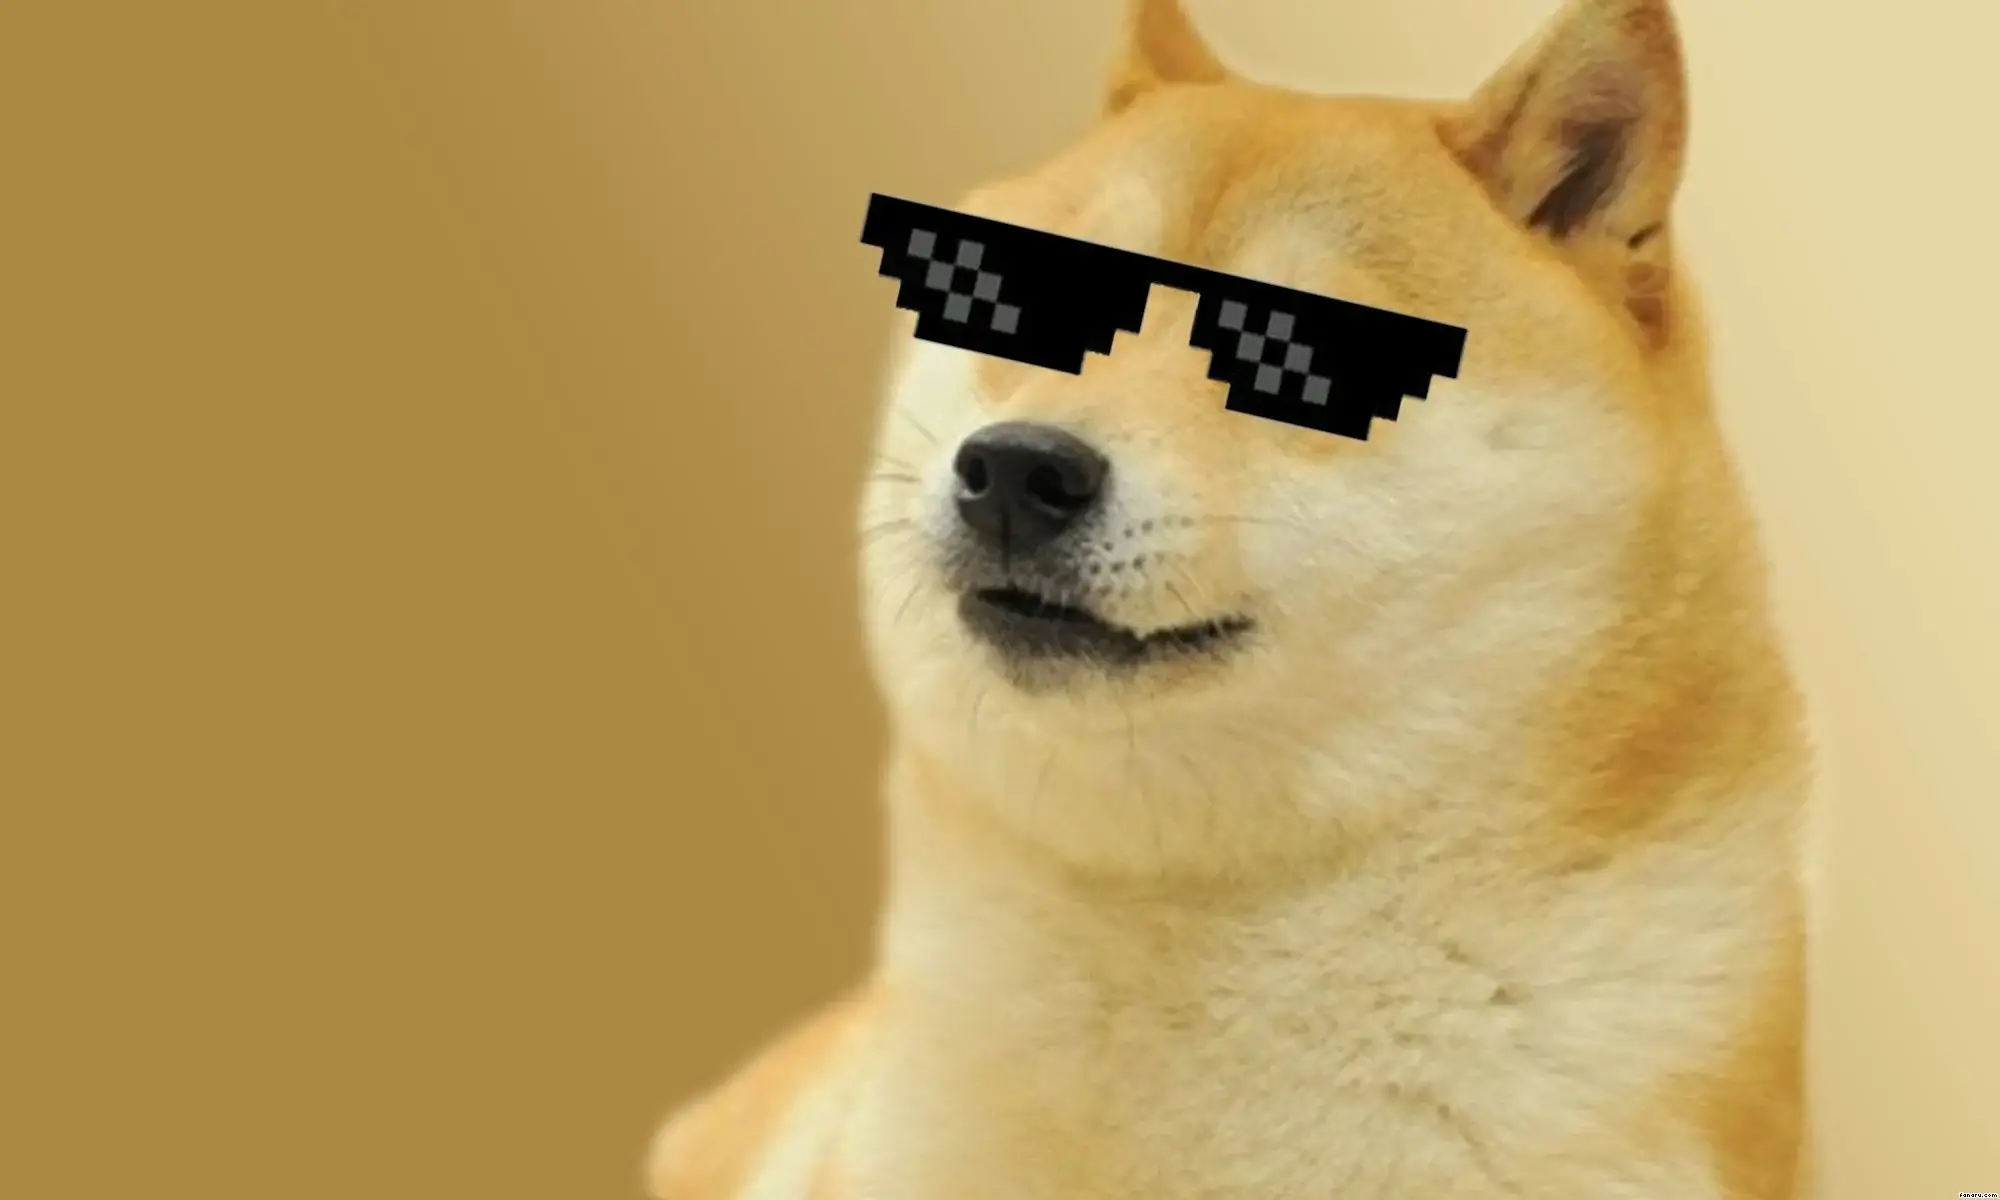 Original Shiba Inu Dog Behind Dogecoin is Dangerously Ill